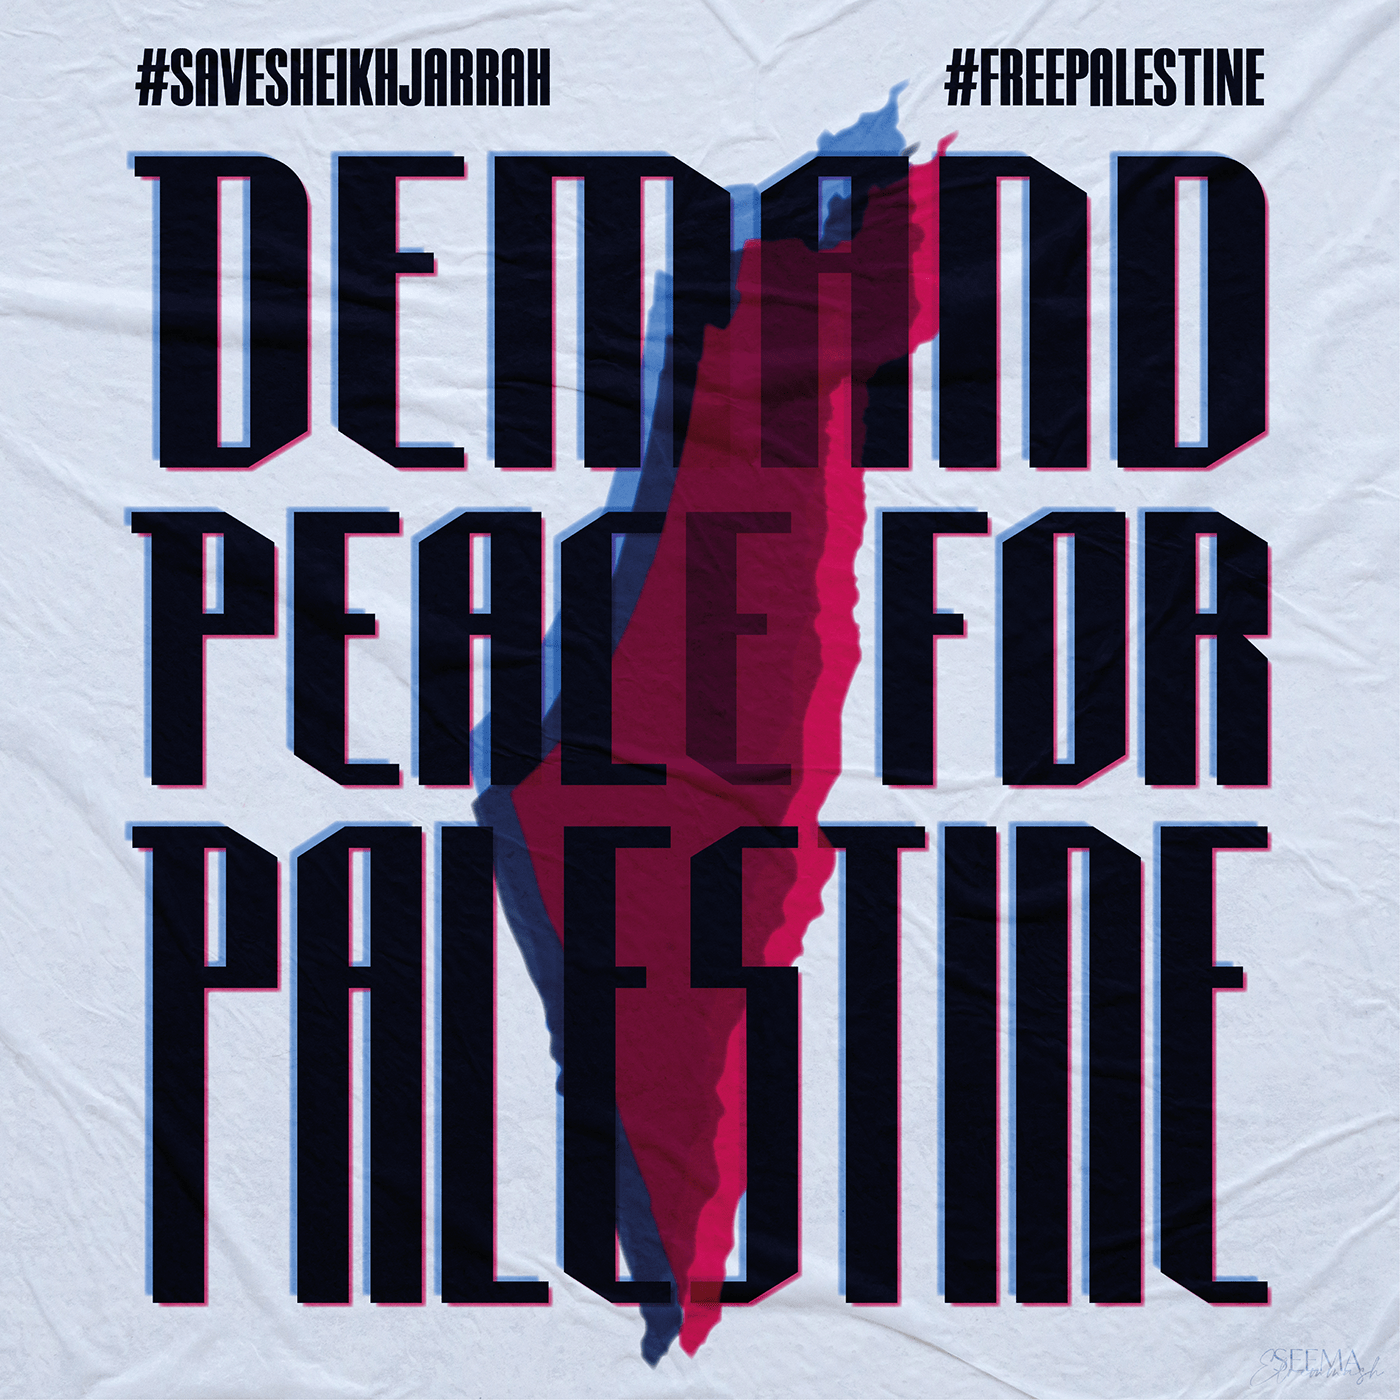 double exposure freedom palestine poster